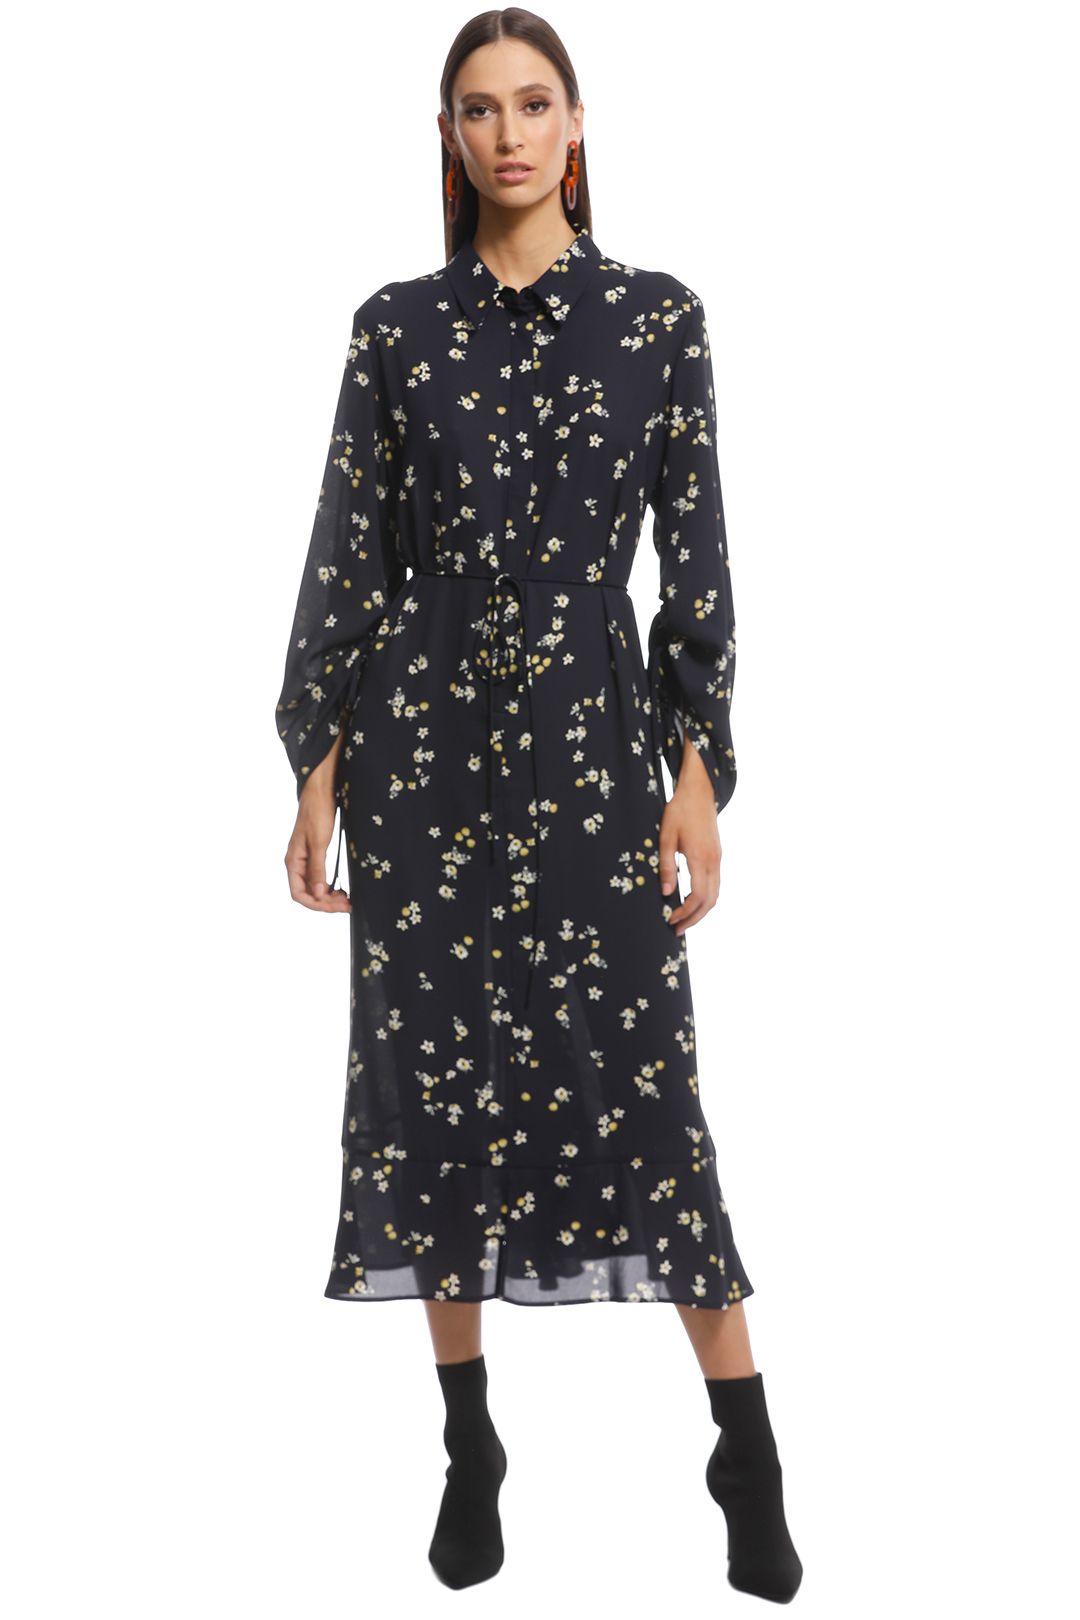 Veronika Maine - Dainty Floral Shirt Dress - Black Floral - Front